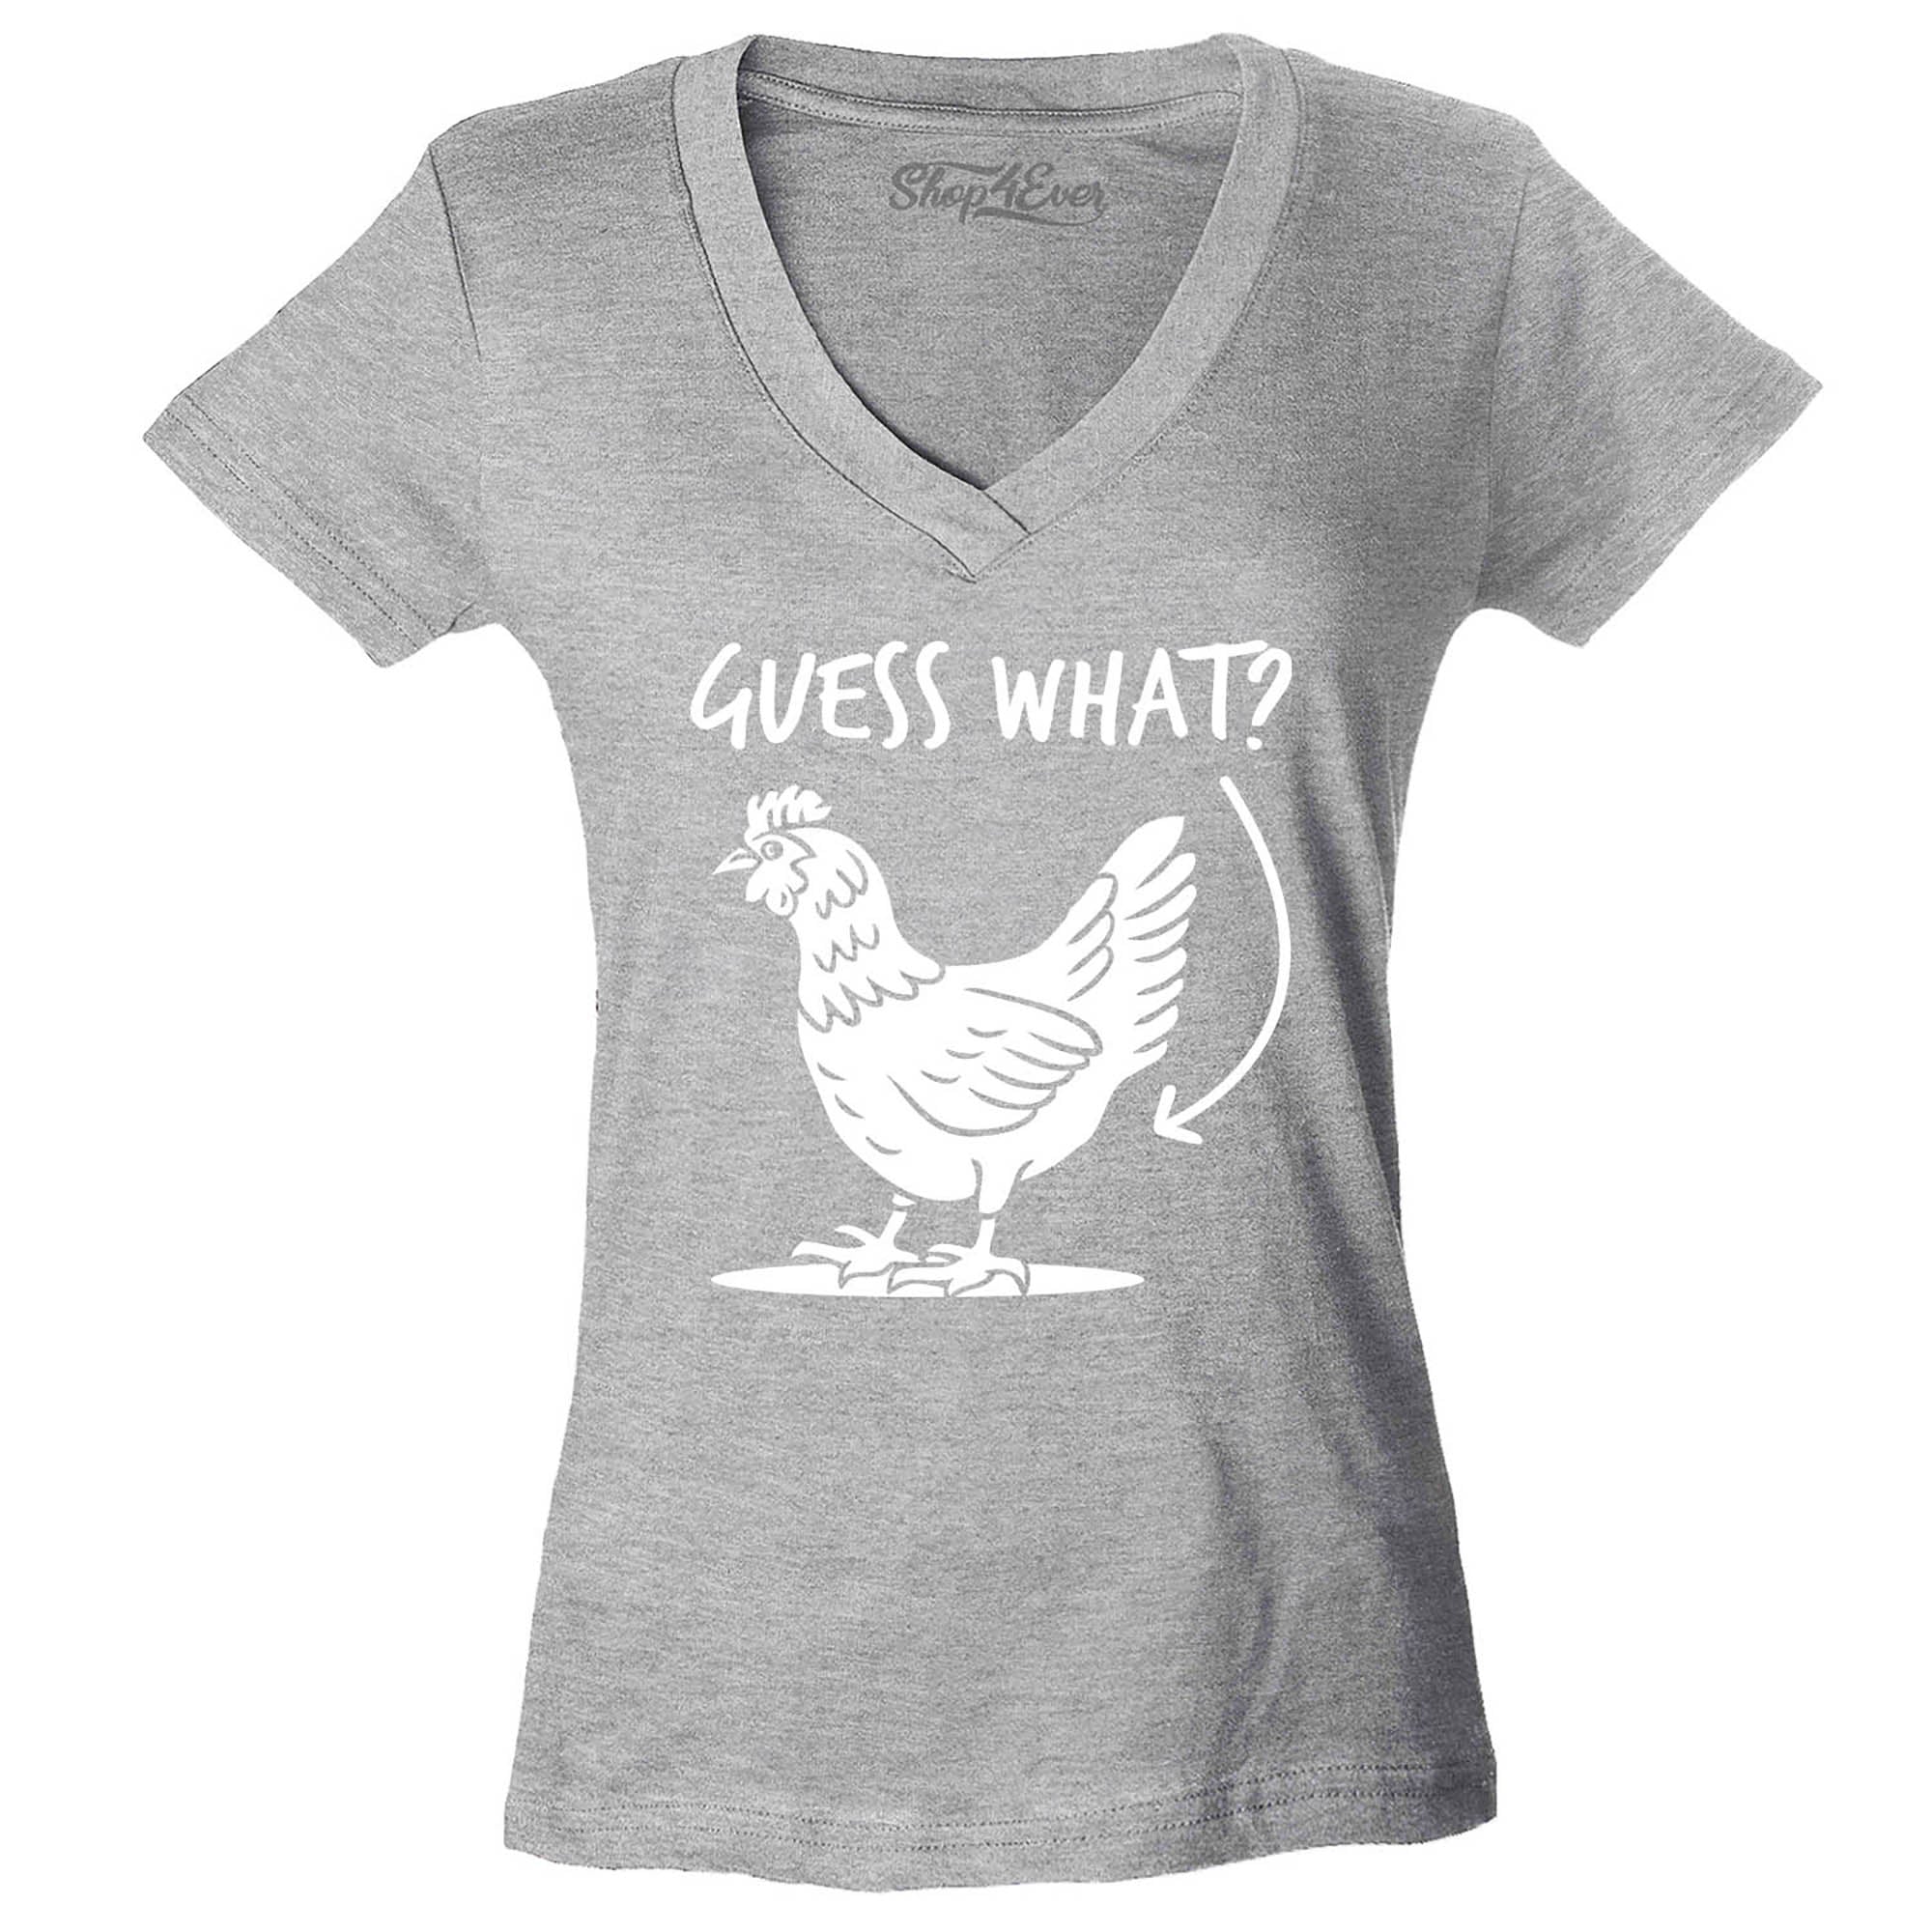 Guess What? Chicken Butt Women's V-Neck T-Shirt Slim Fit